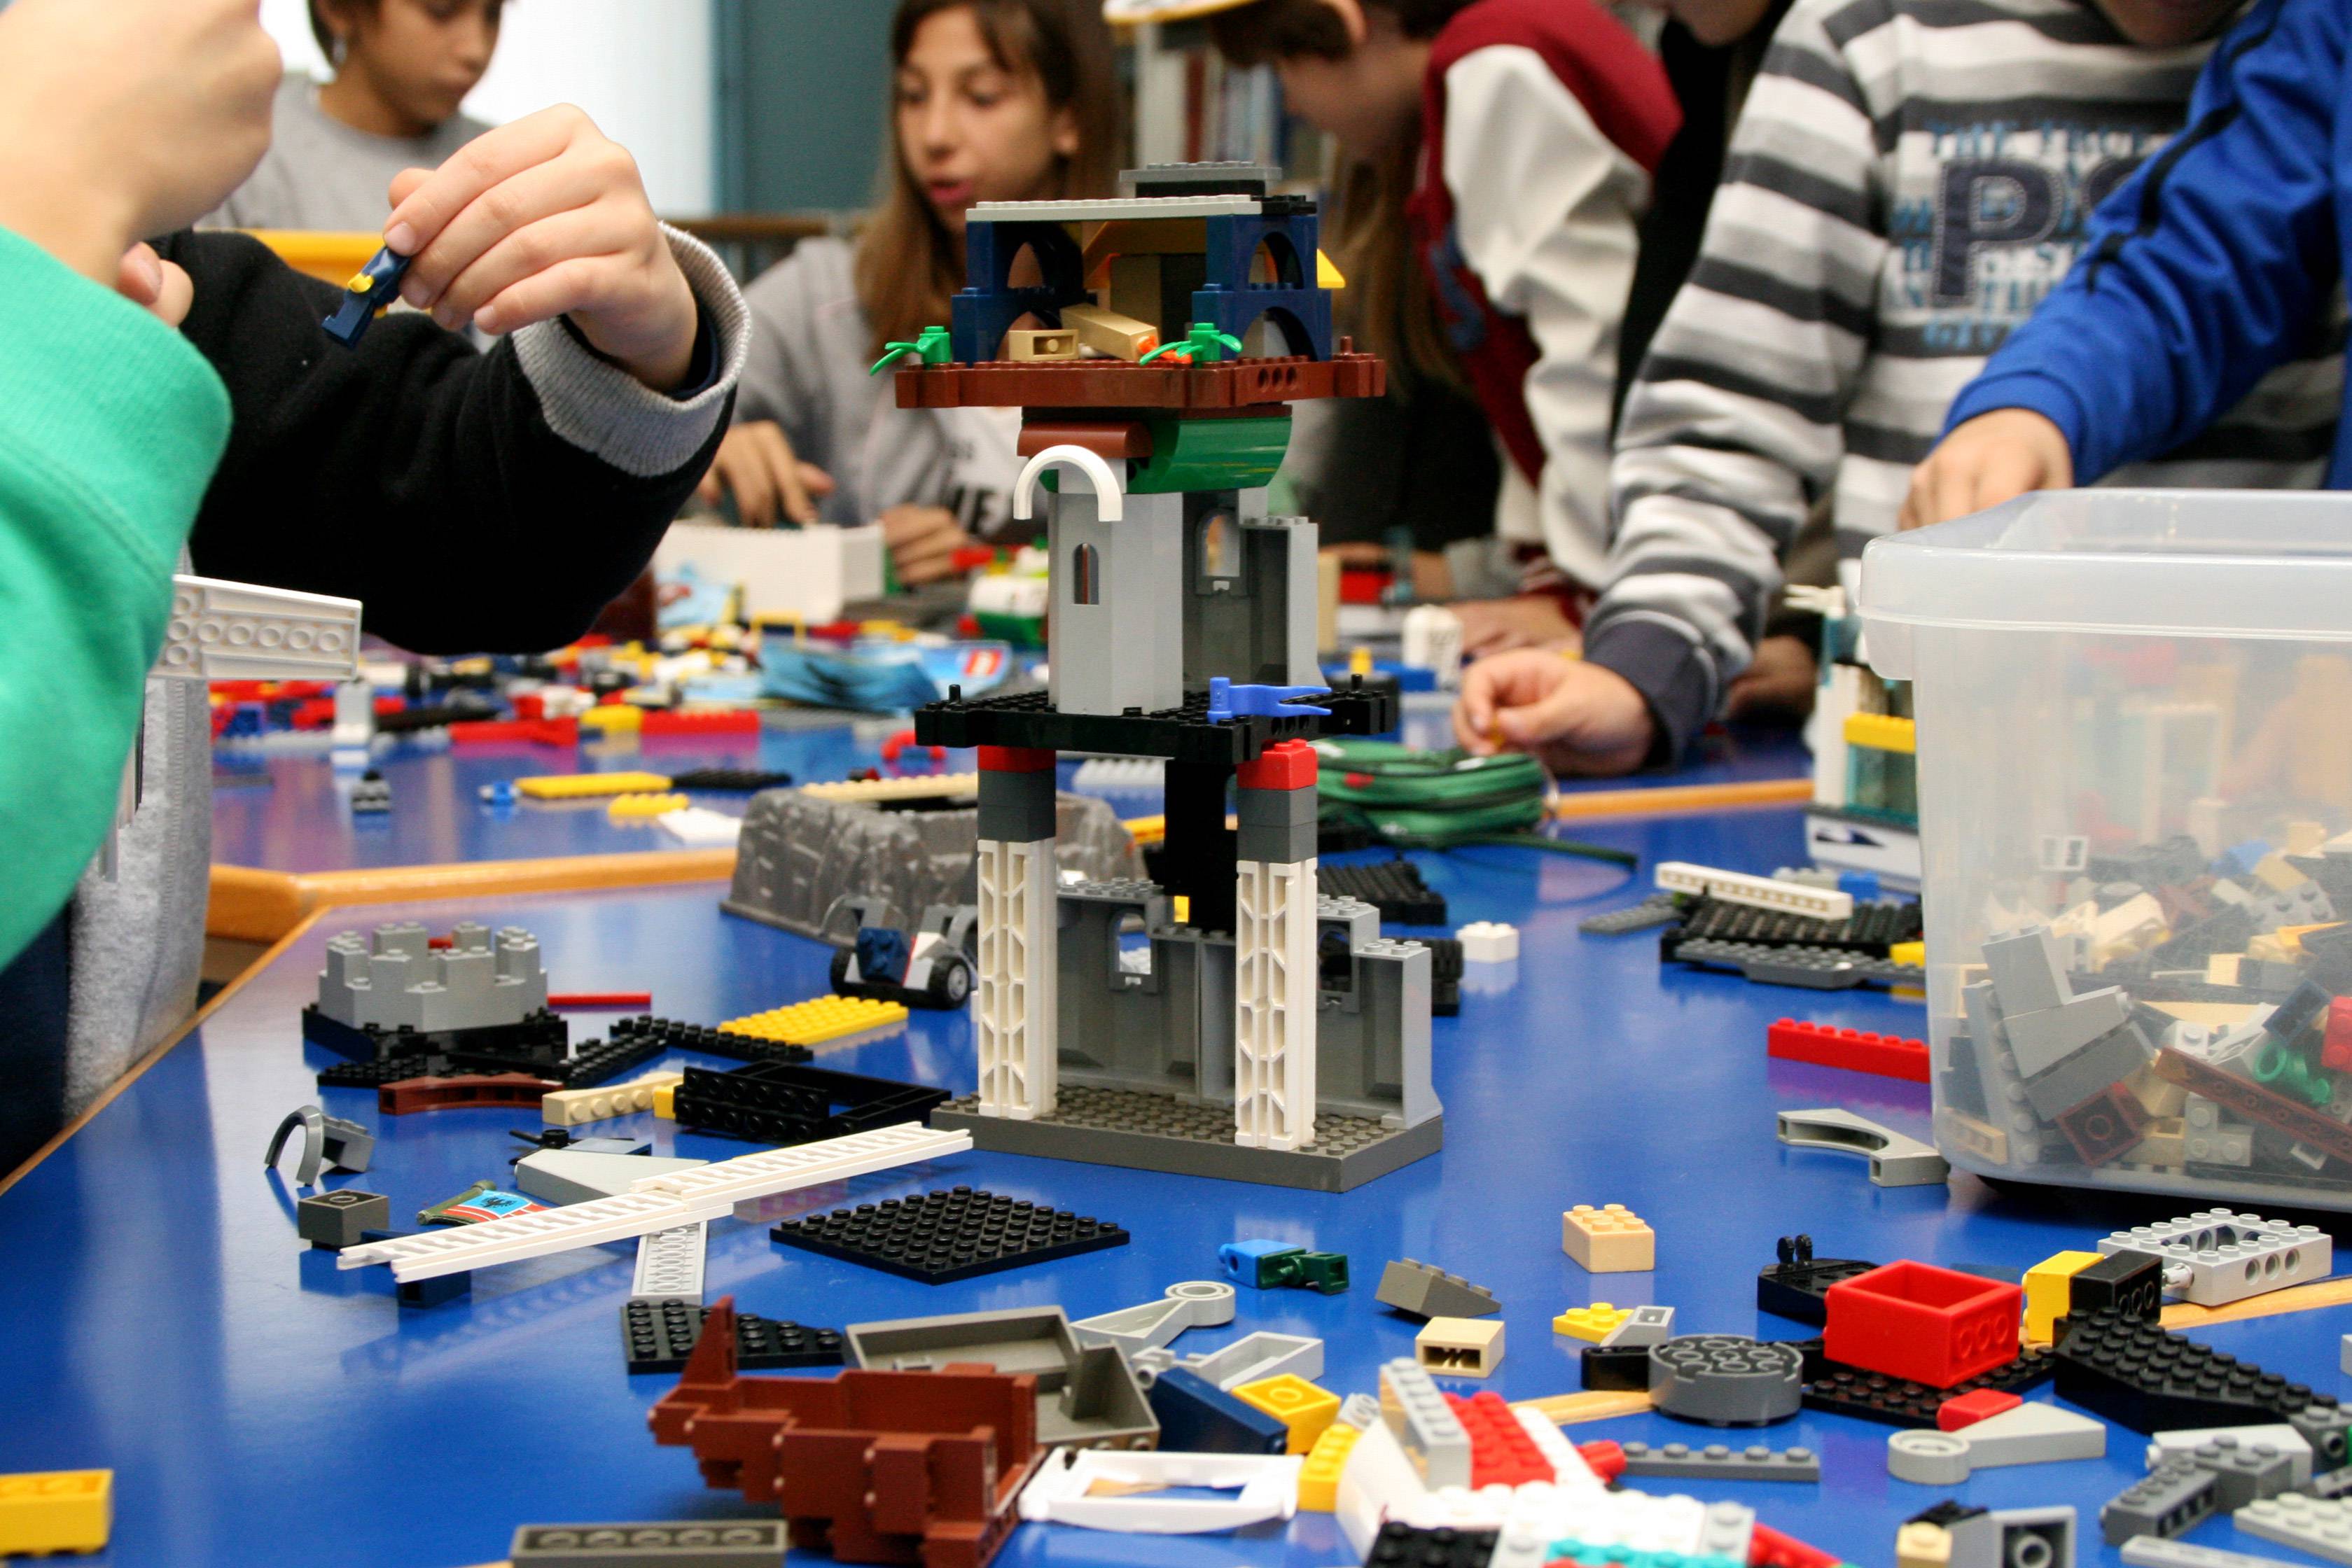 radionica Lego, Dječji odjel Gradske knjižnice Zadar, studeni 2012.